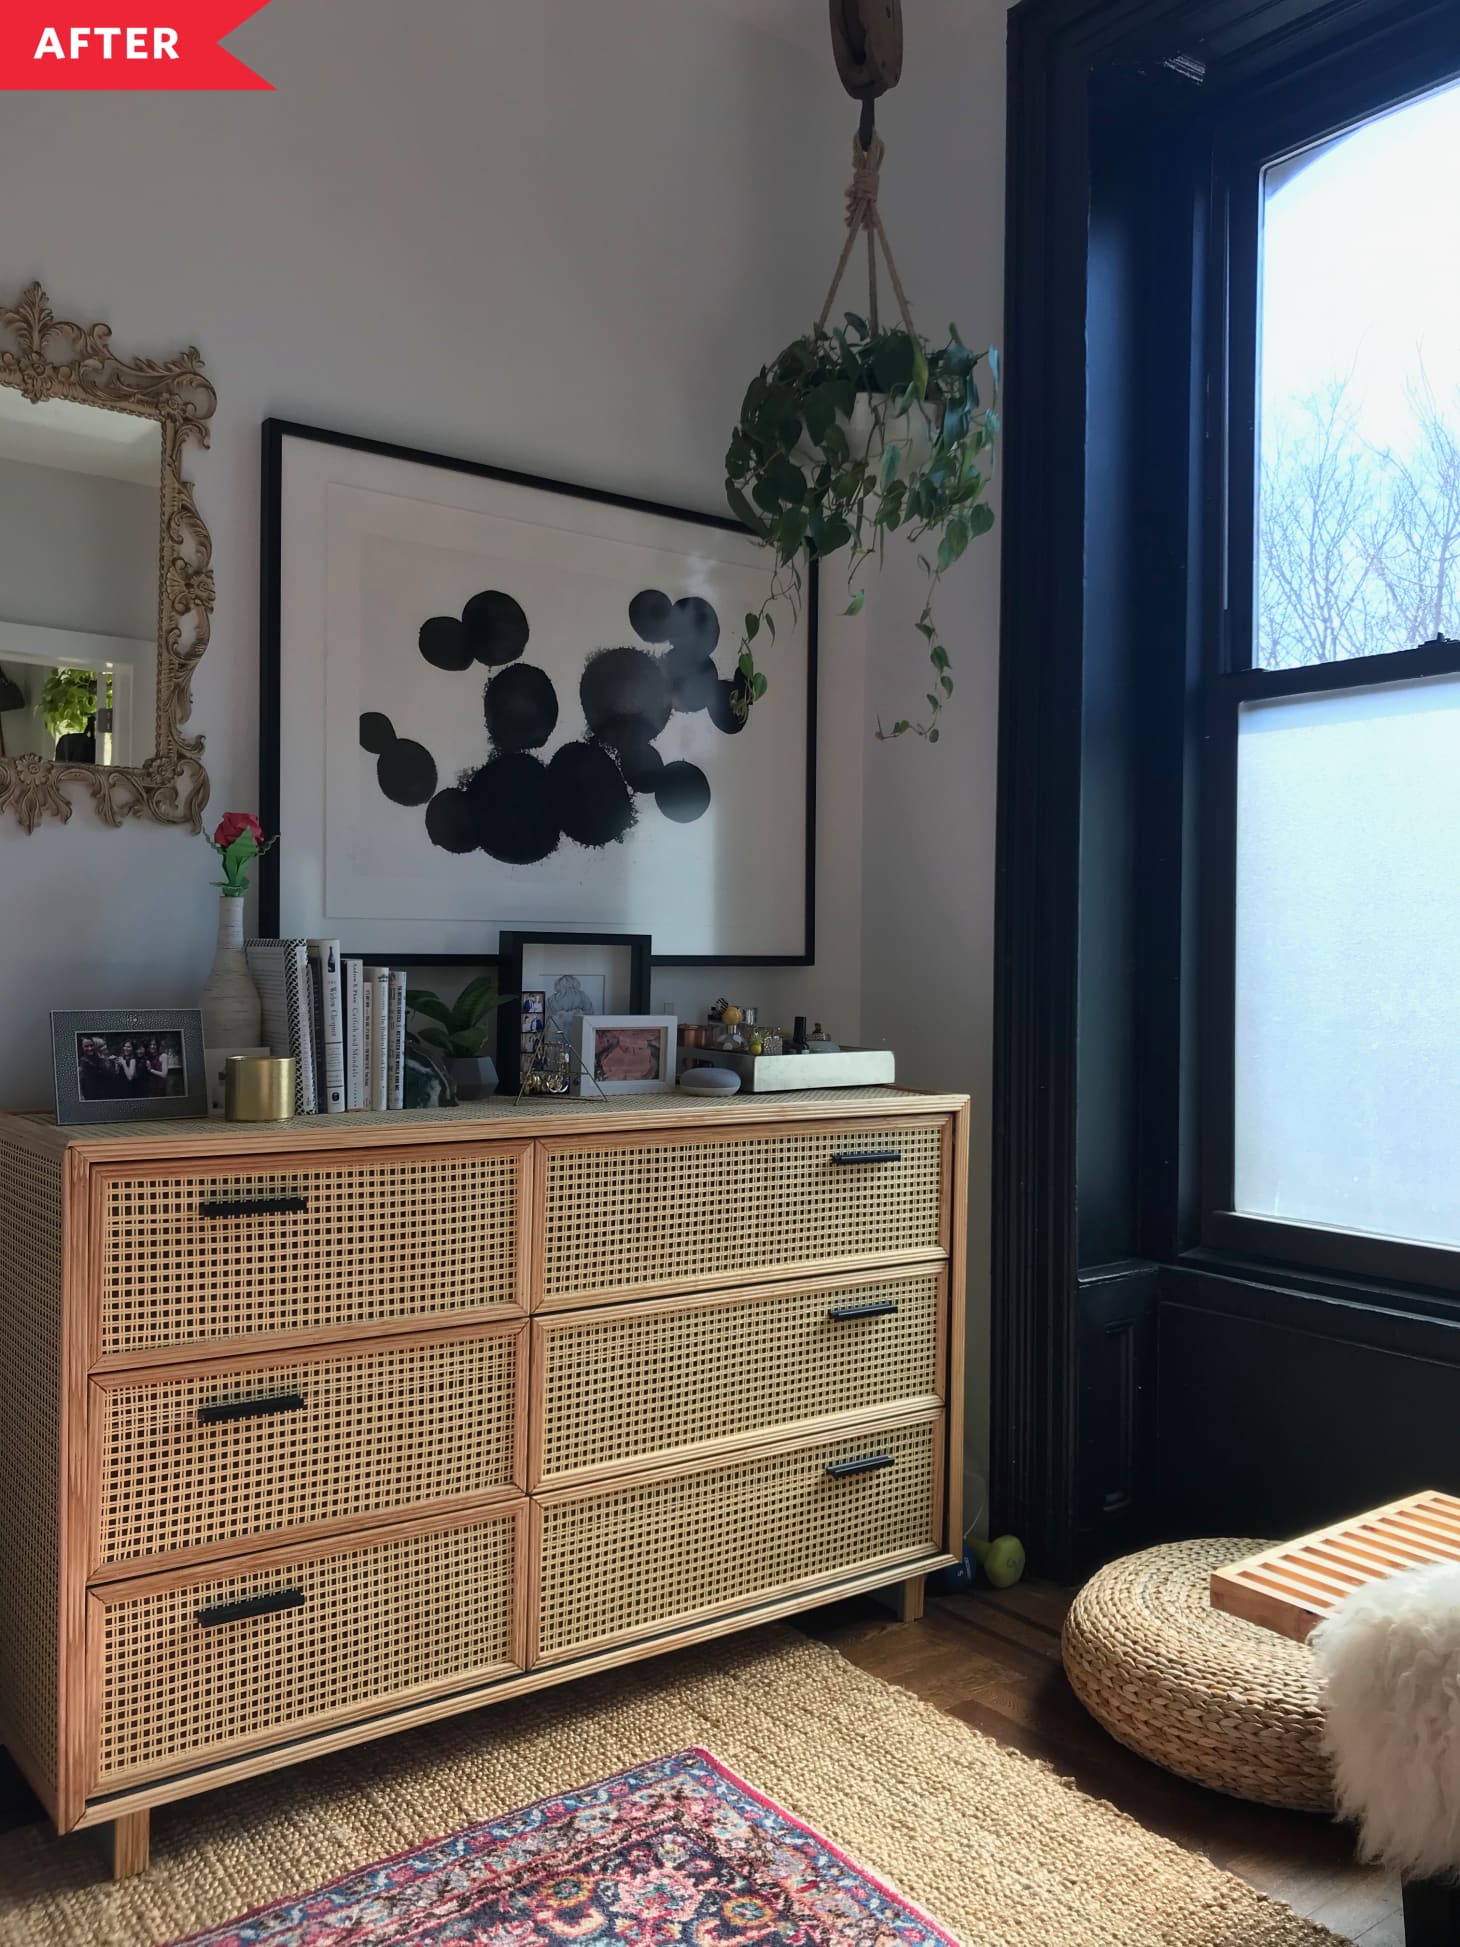 Cane Dresser Redo - DIY Wood and Cane Dresser | Apartment Therapy